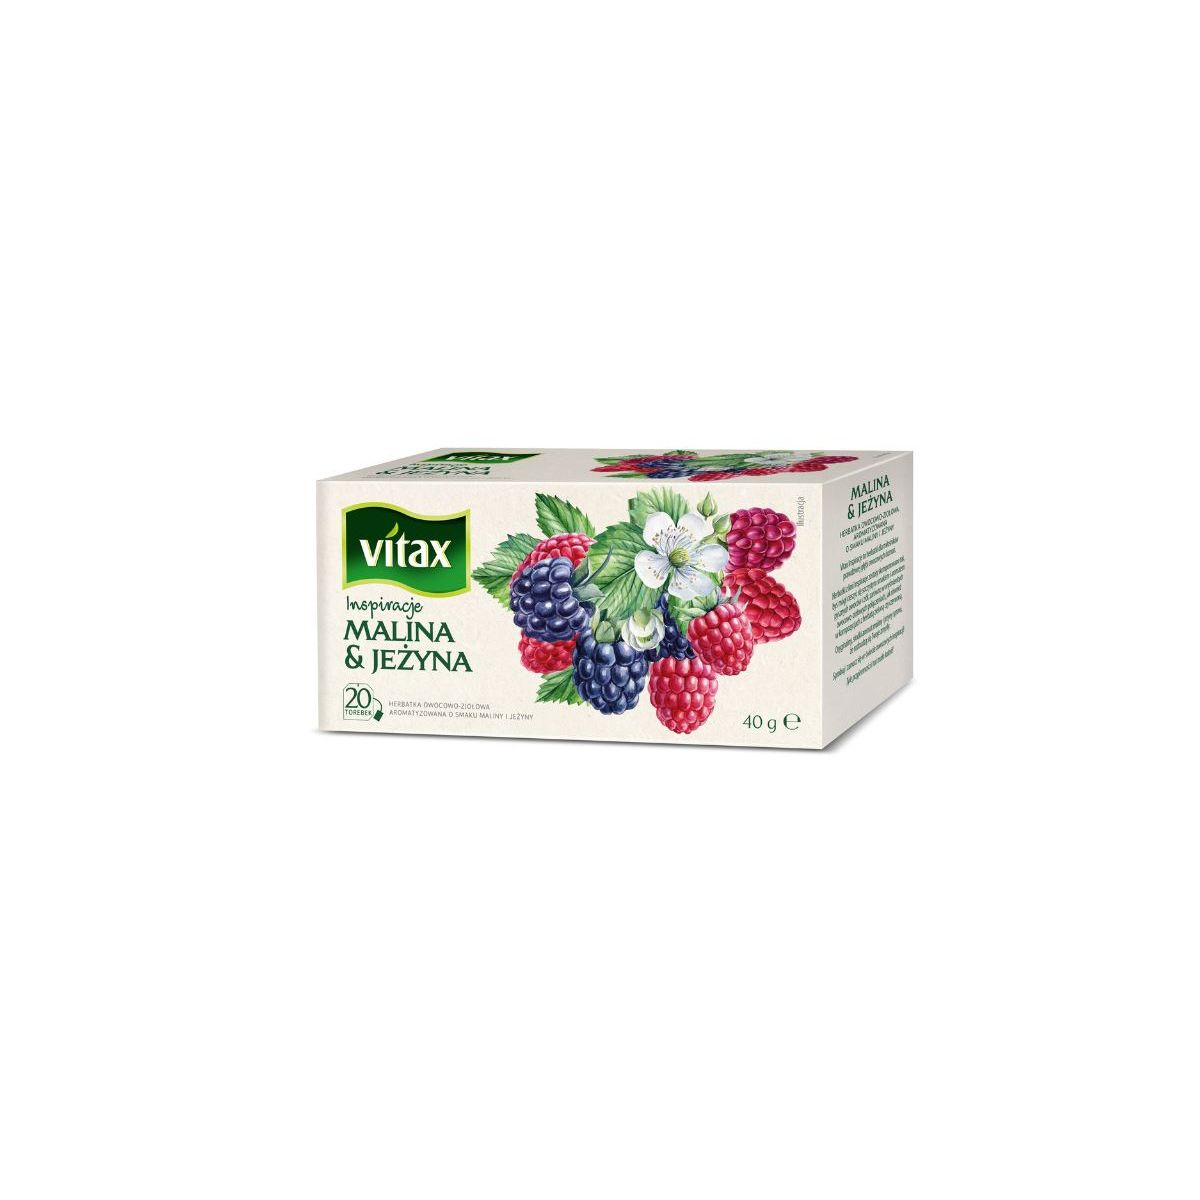 Vitax Herbata Malina & Jeżyna